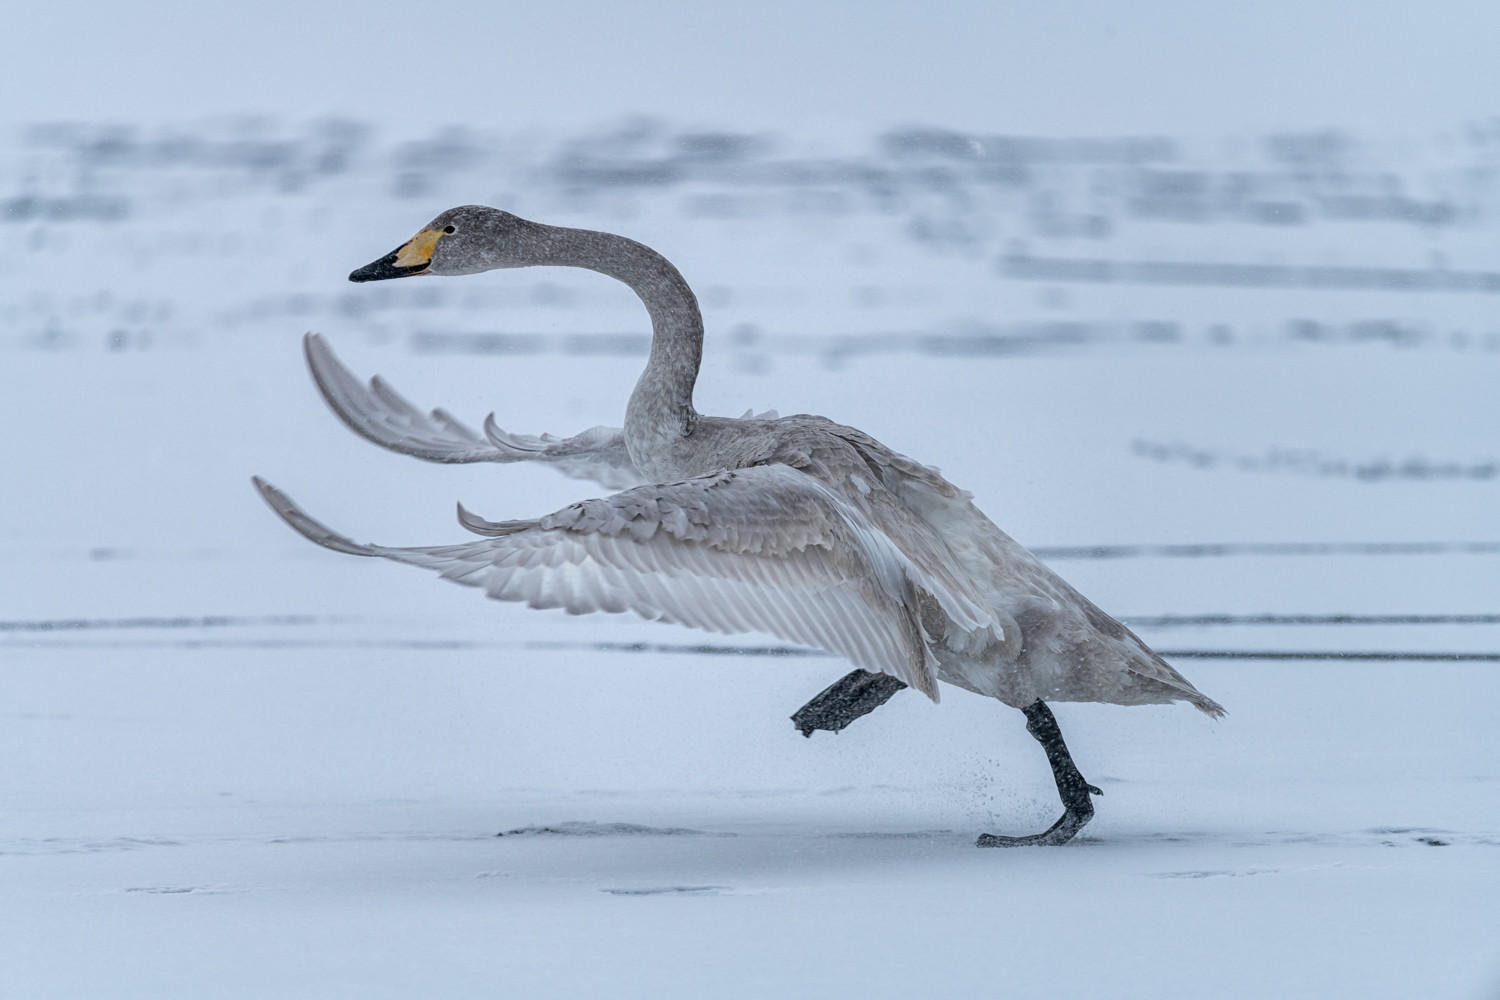 Whoopers Swan : Japan, Hokkaido, Snowbound : ELIZABETH SANJUAN PHOTOGRAPHY